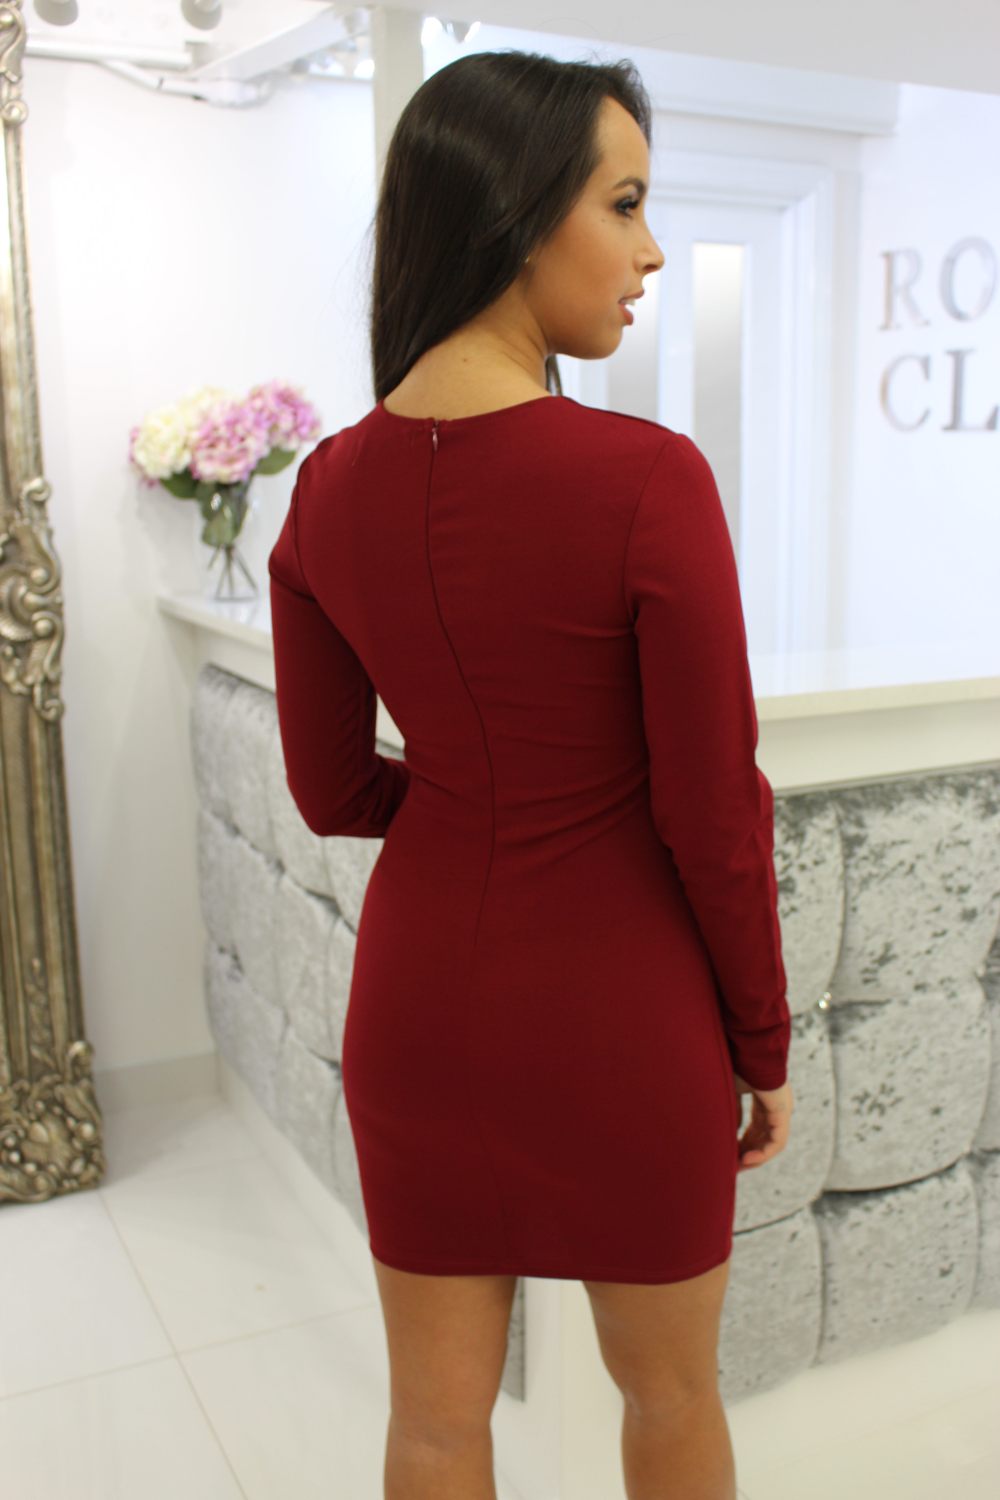 Burgundy Lace Front Dress